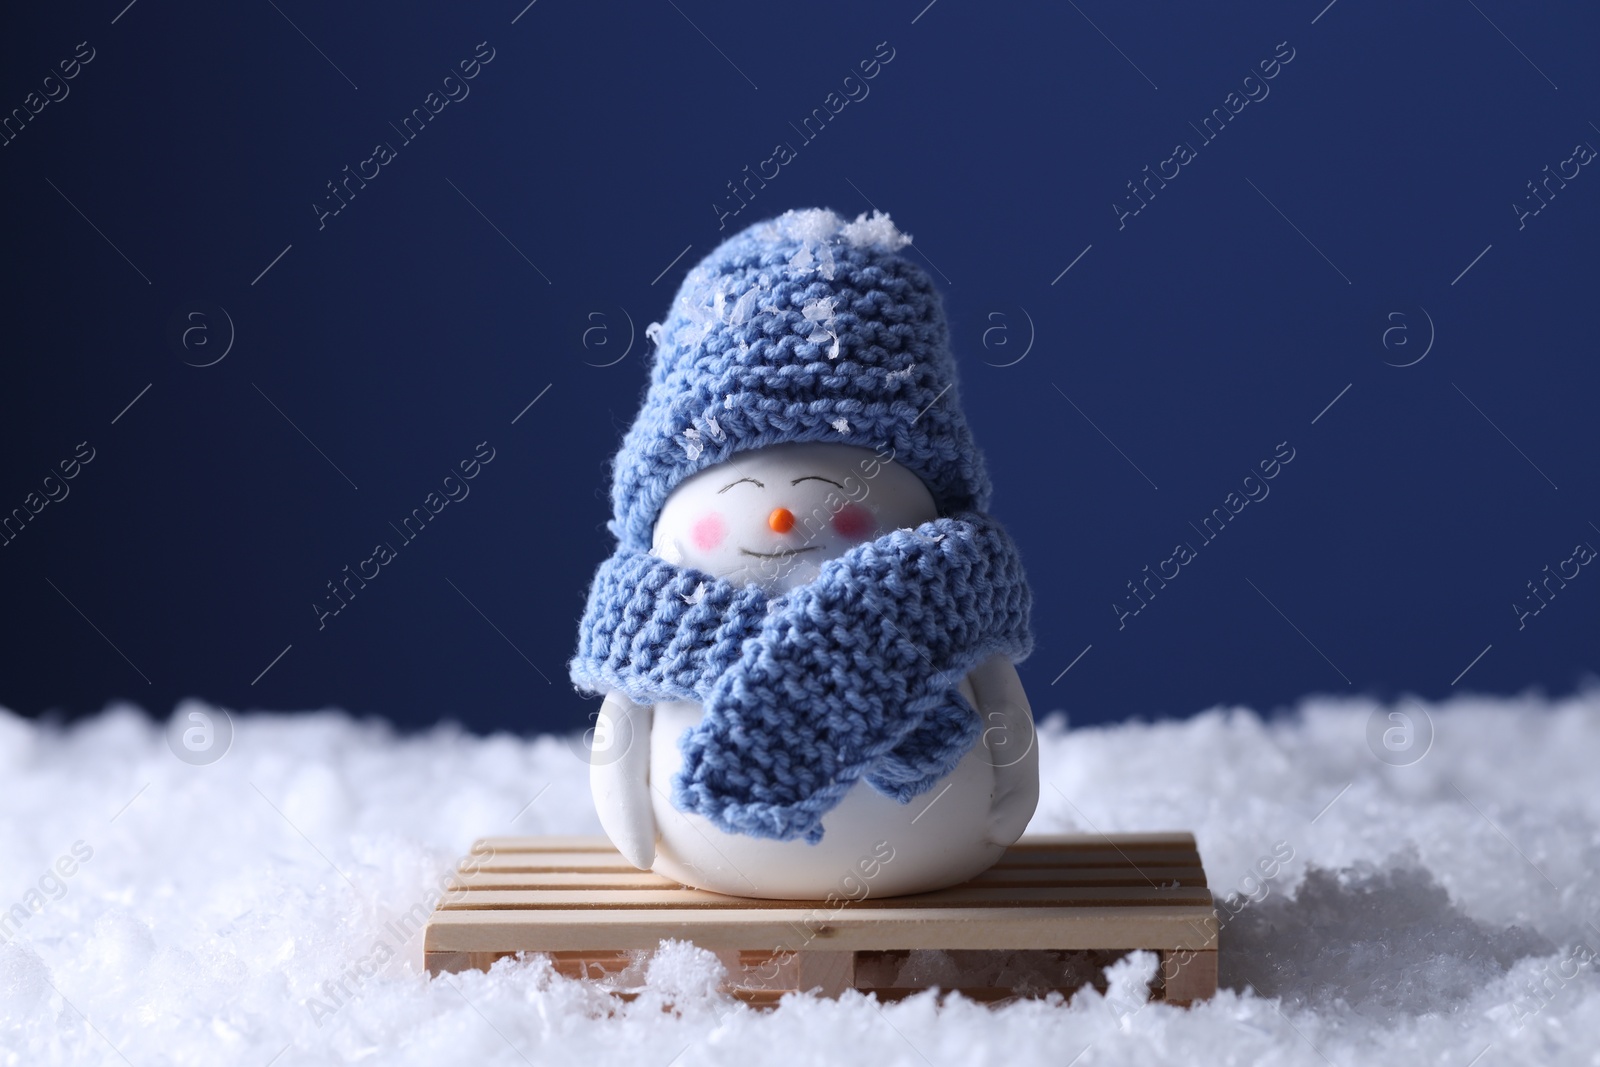 Photo of Cute decorative snowman on artificial snow against blue background, closeup